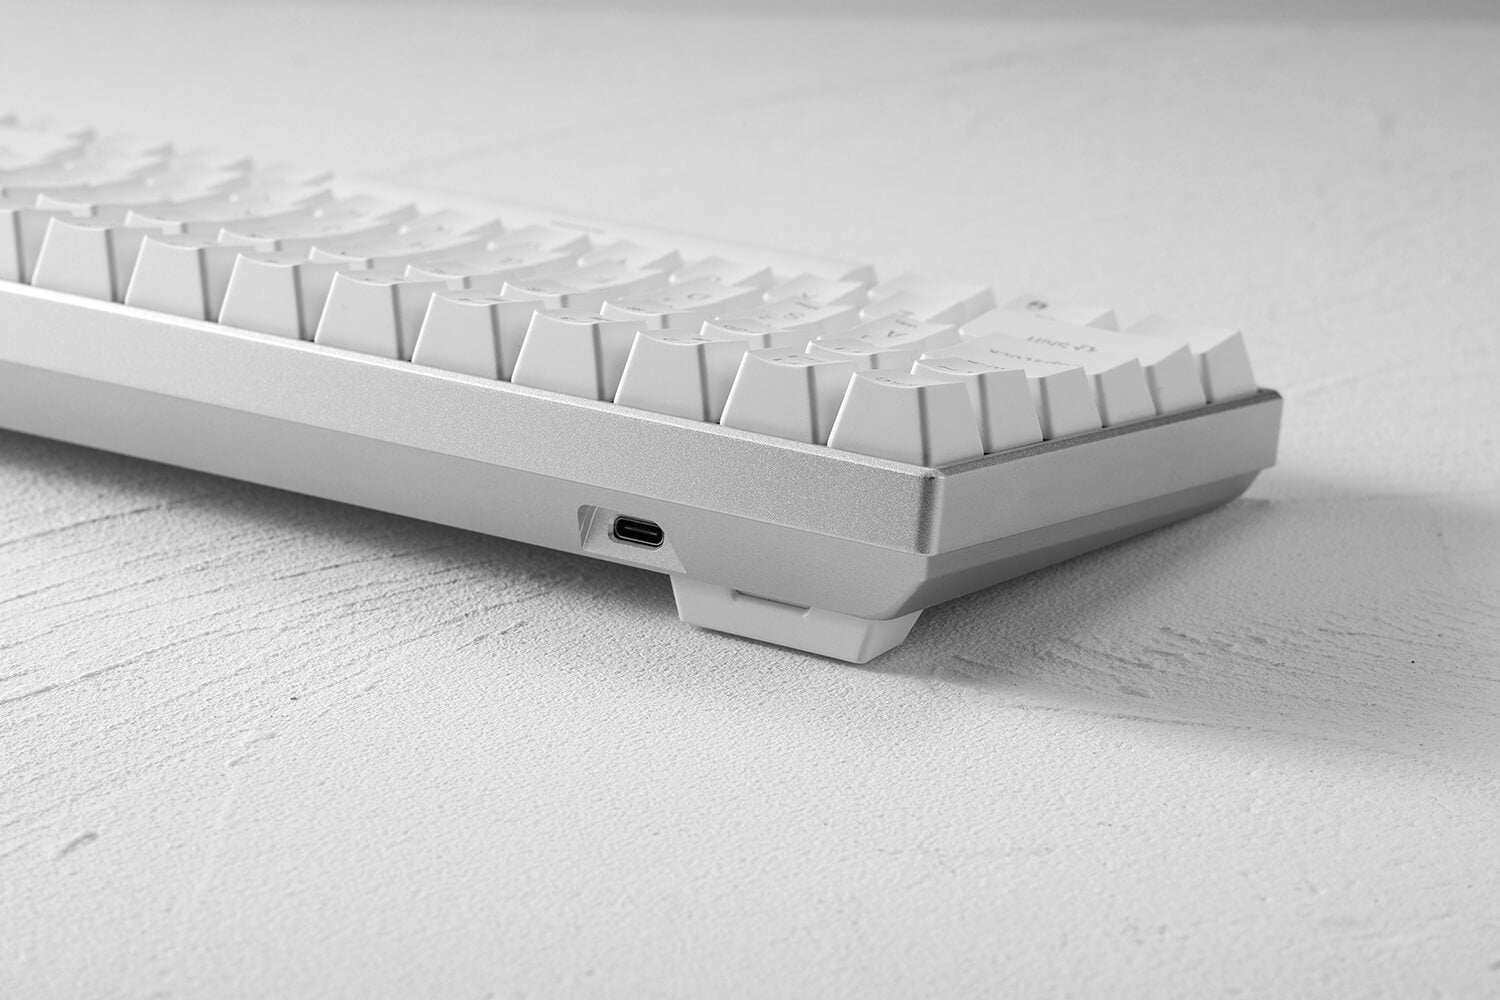 metal keyboard